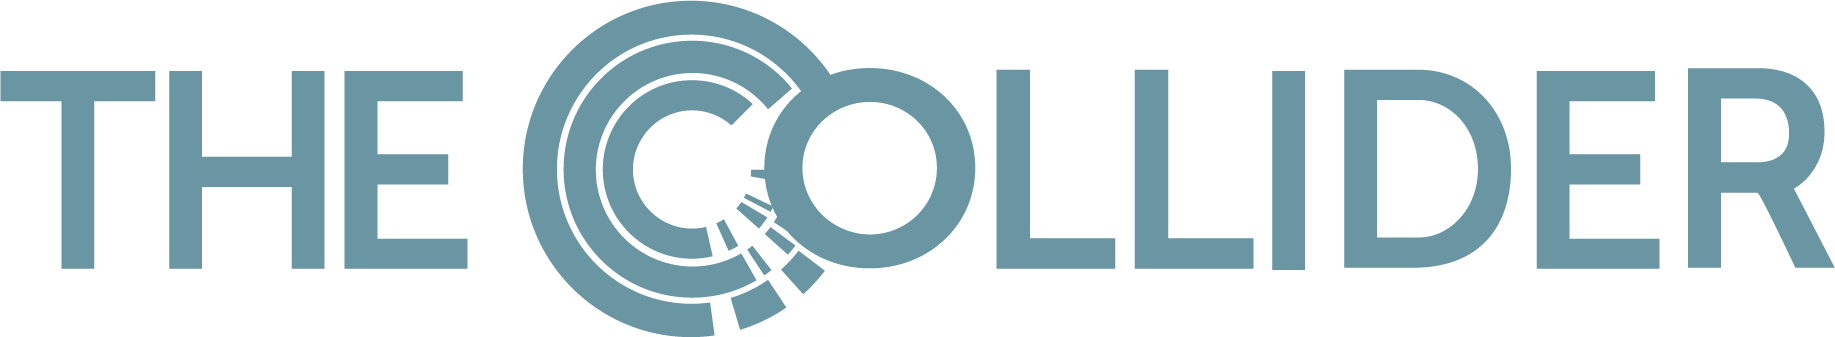 The Collider logo